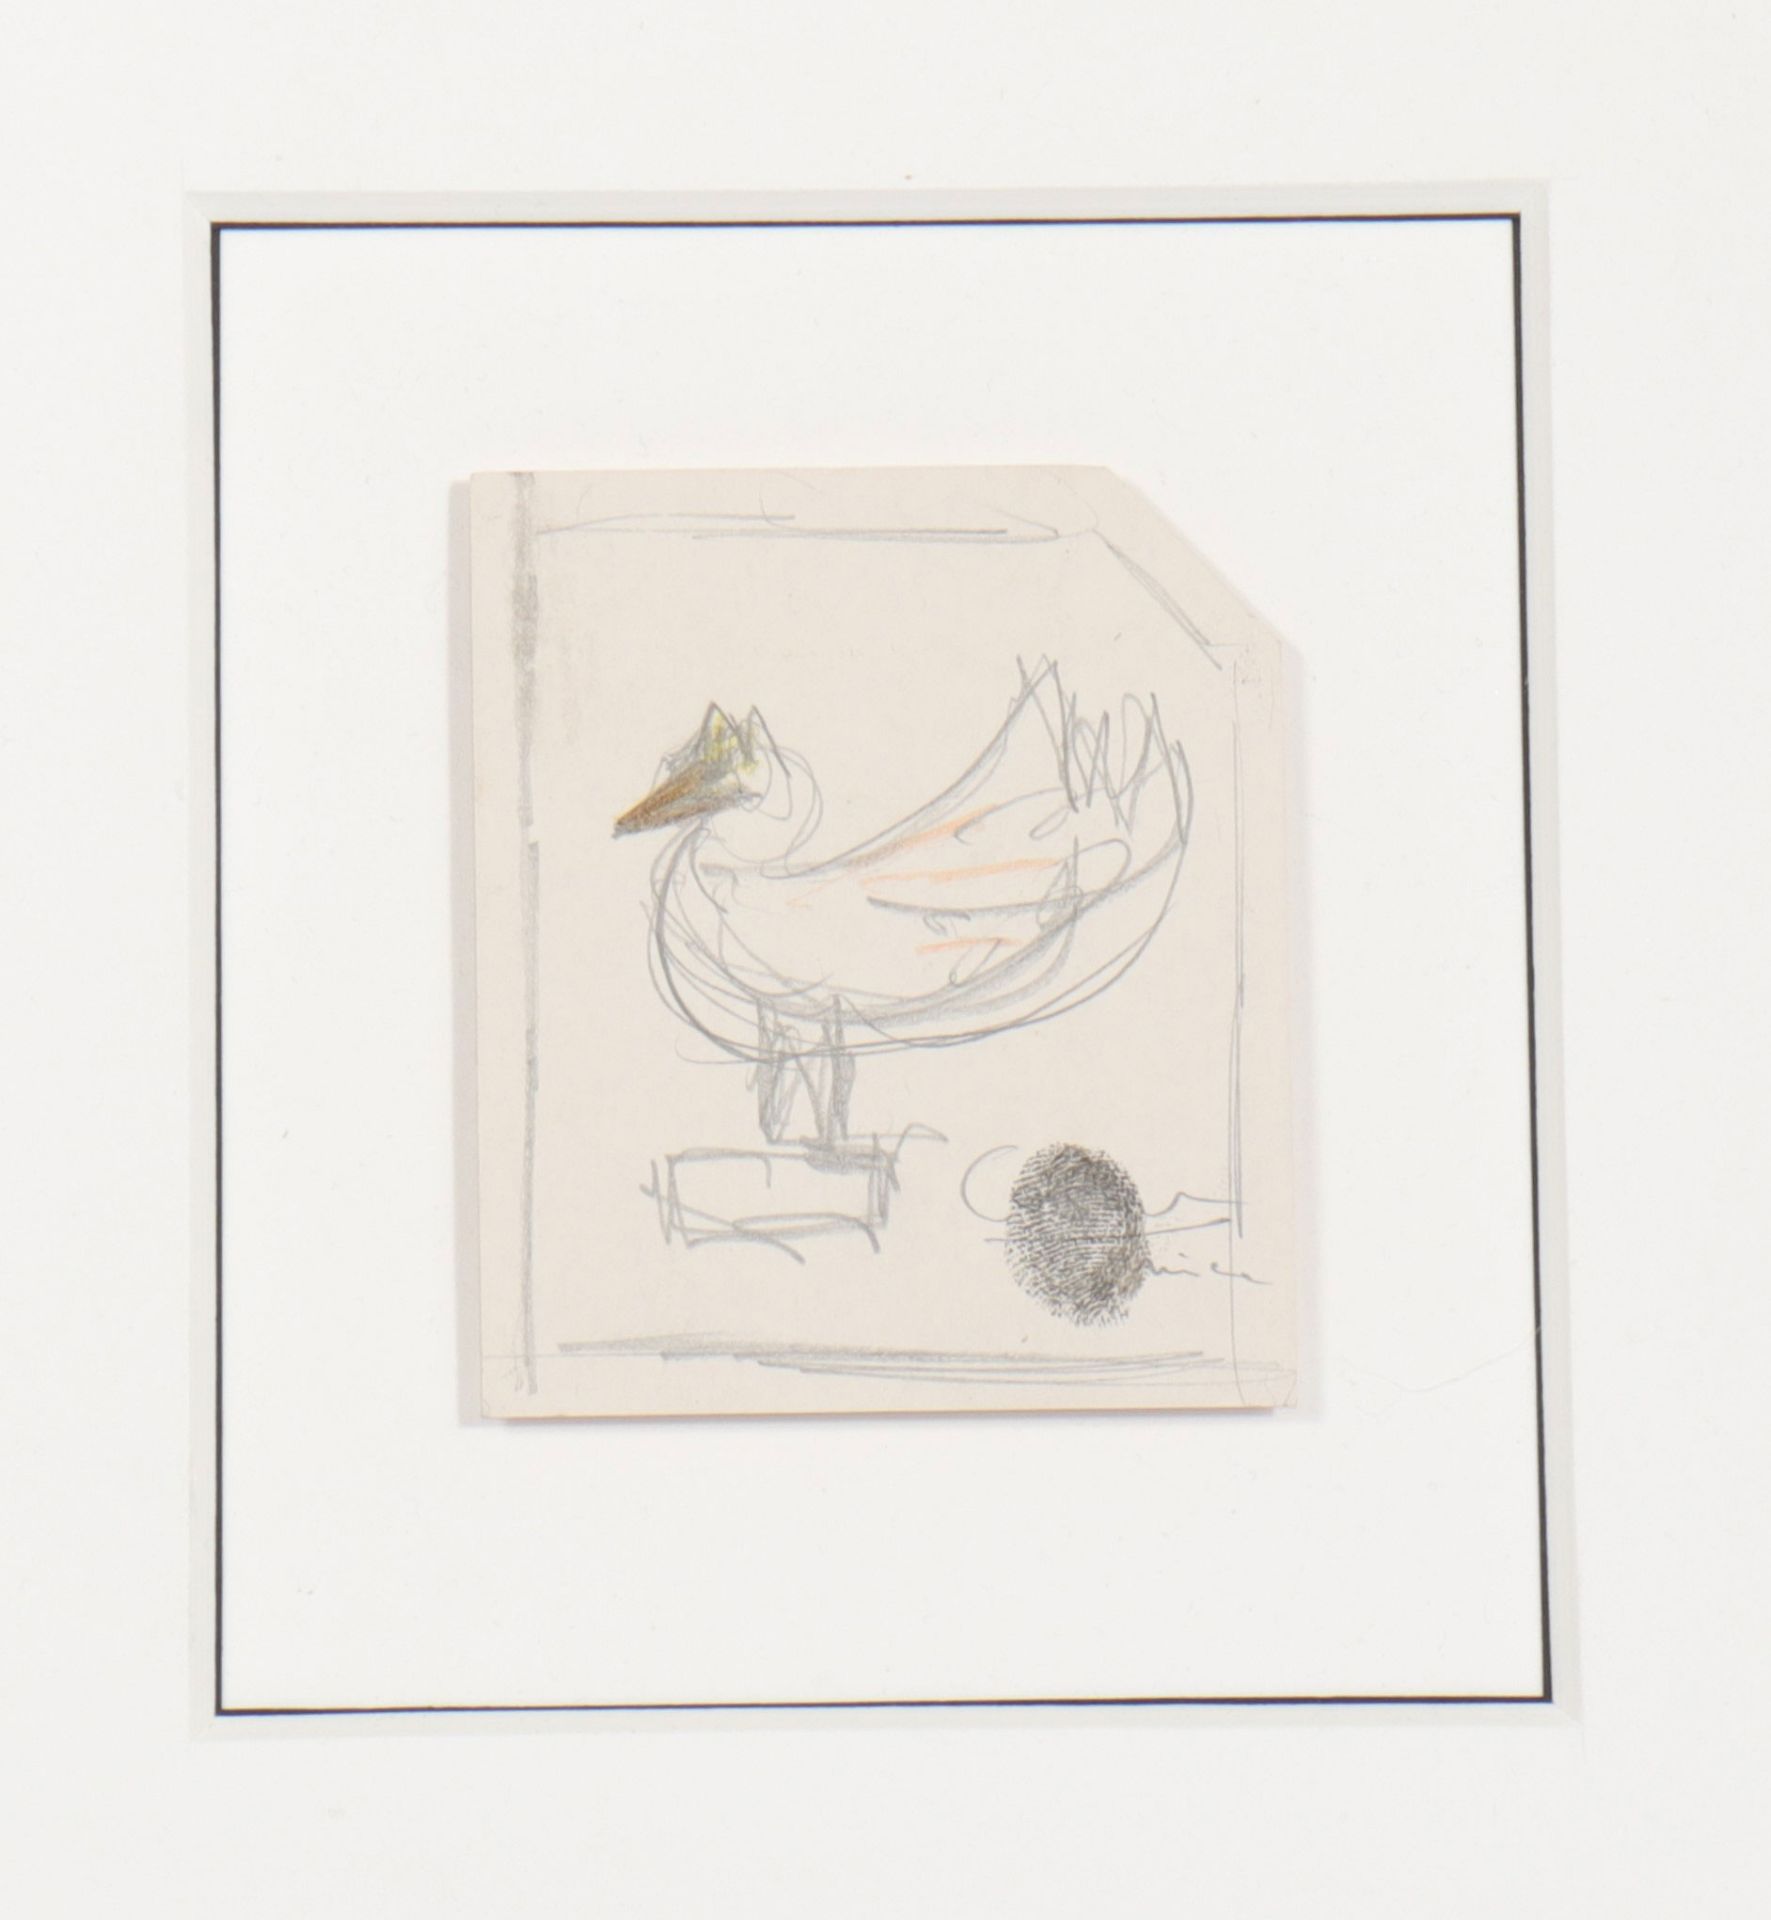 CeSAR (1921-1998) pencil drawing "the bird" signed